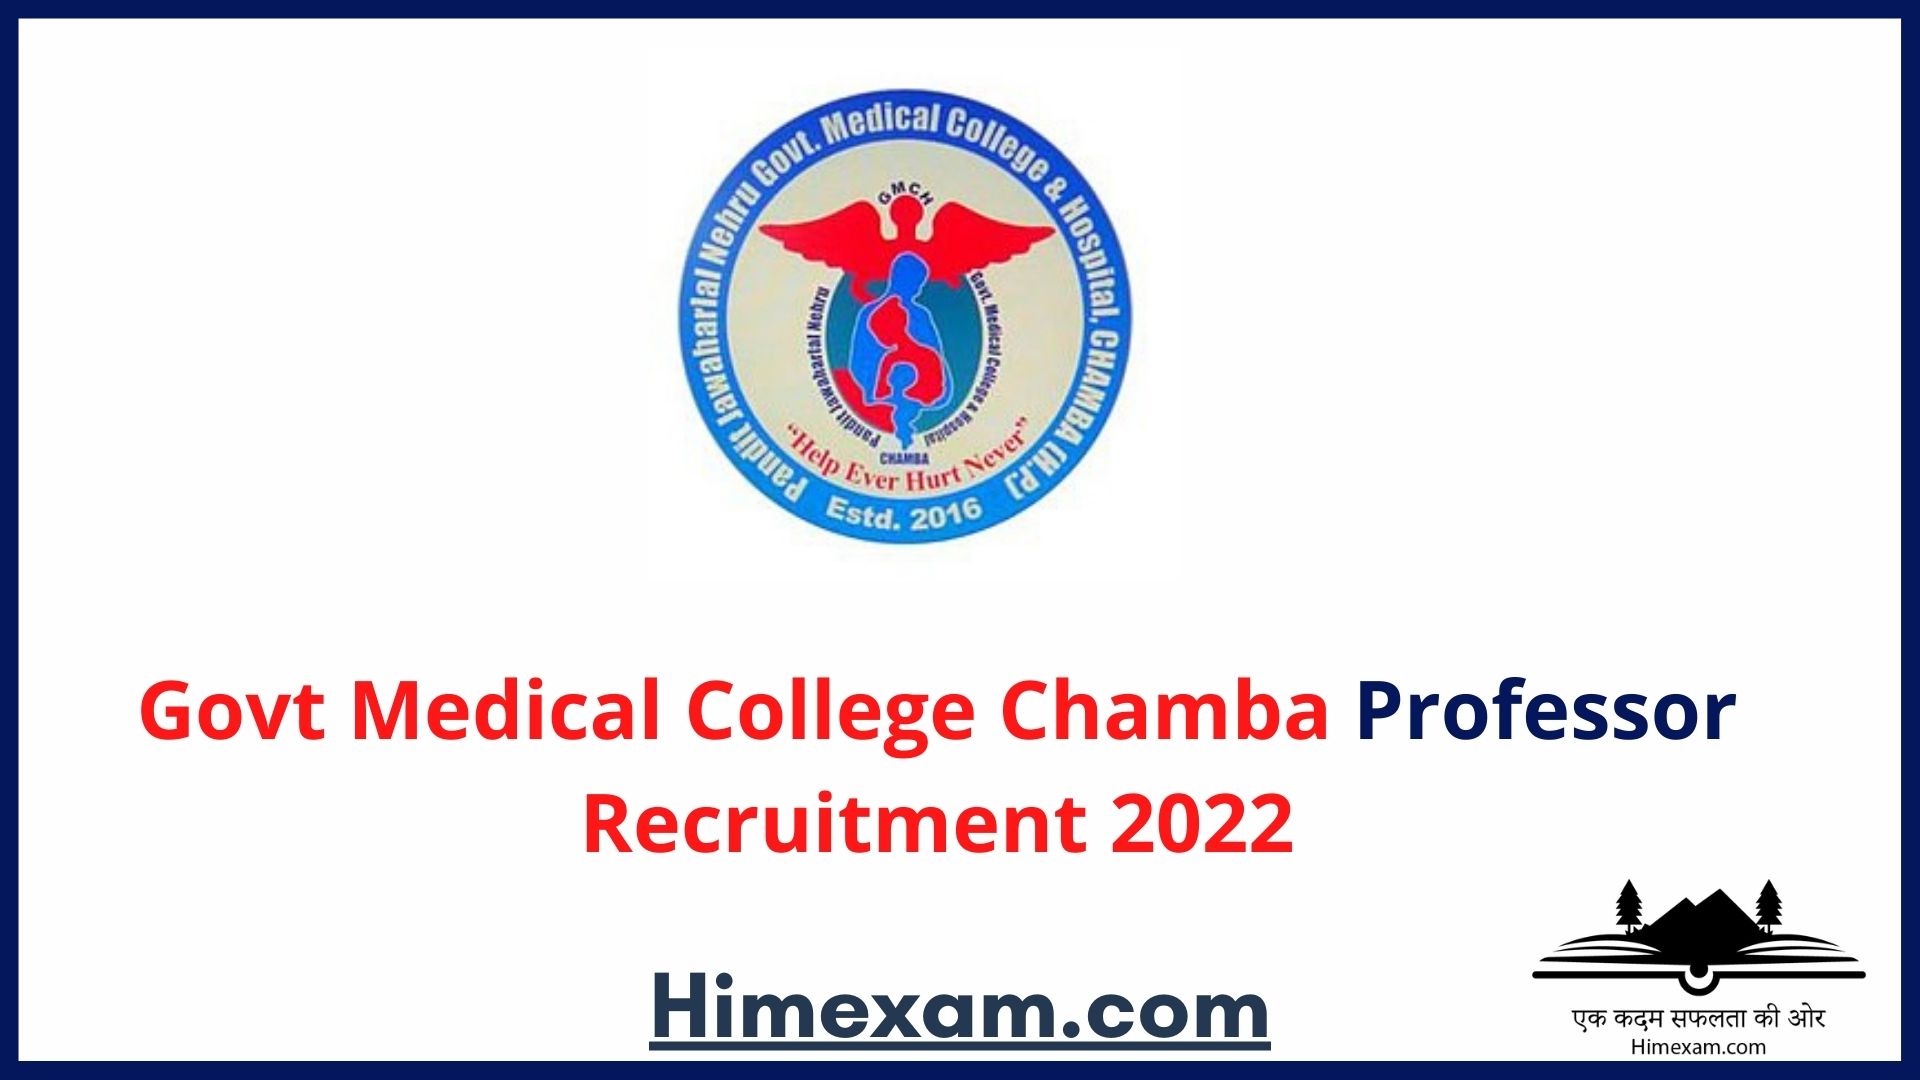 Govt Medical College Chamba Professor Recruitment 2022